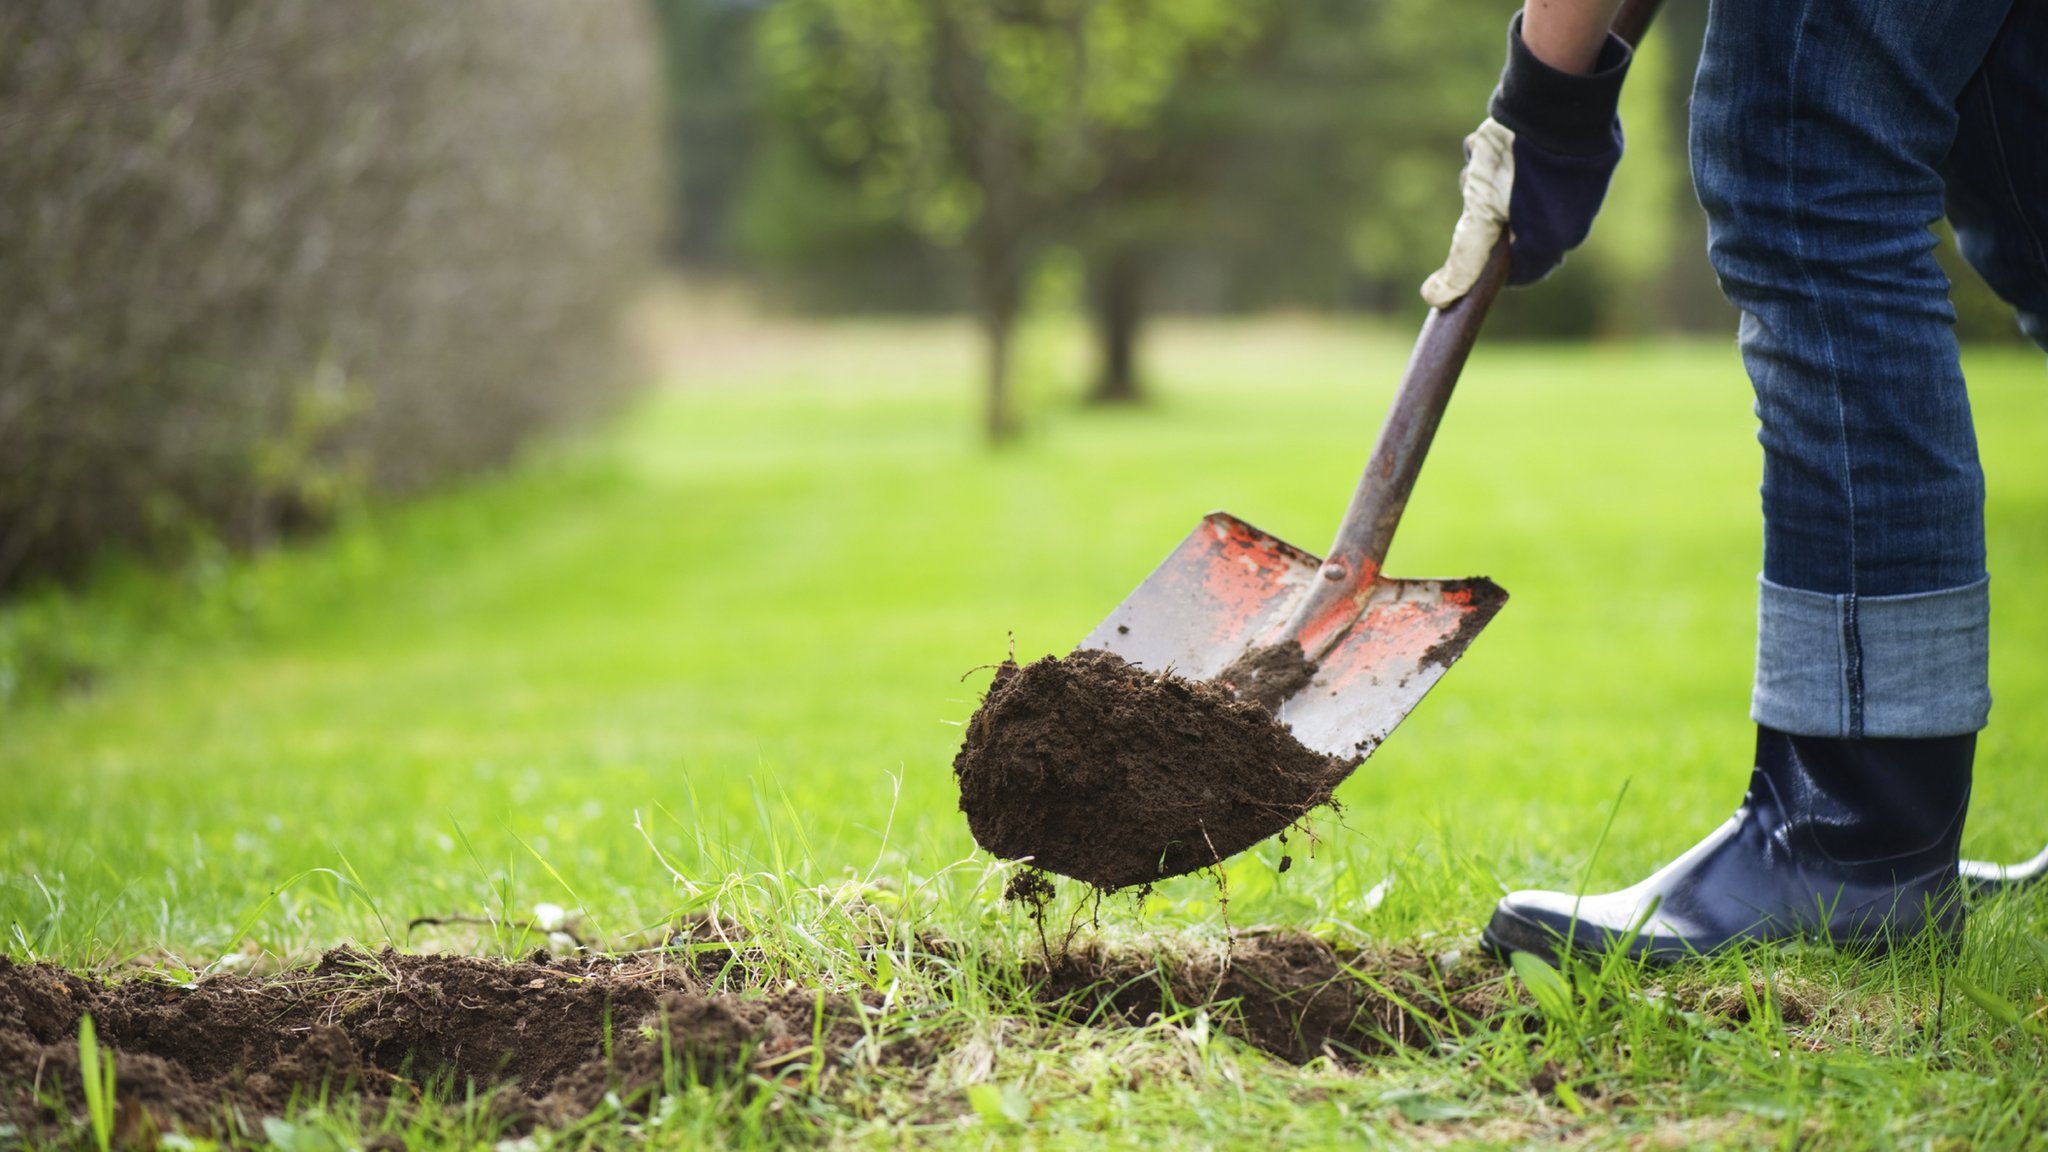 Gardener digging hole in lawn